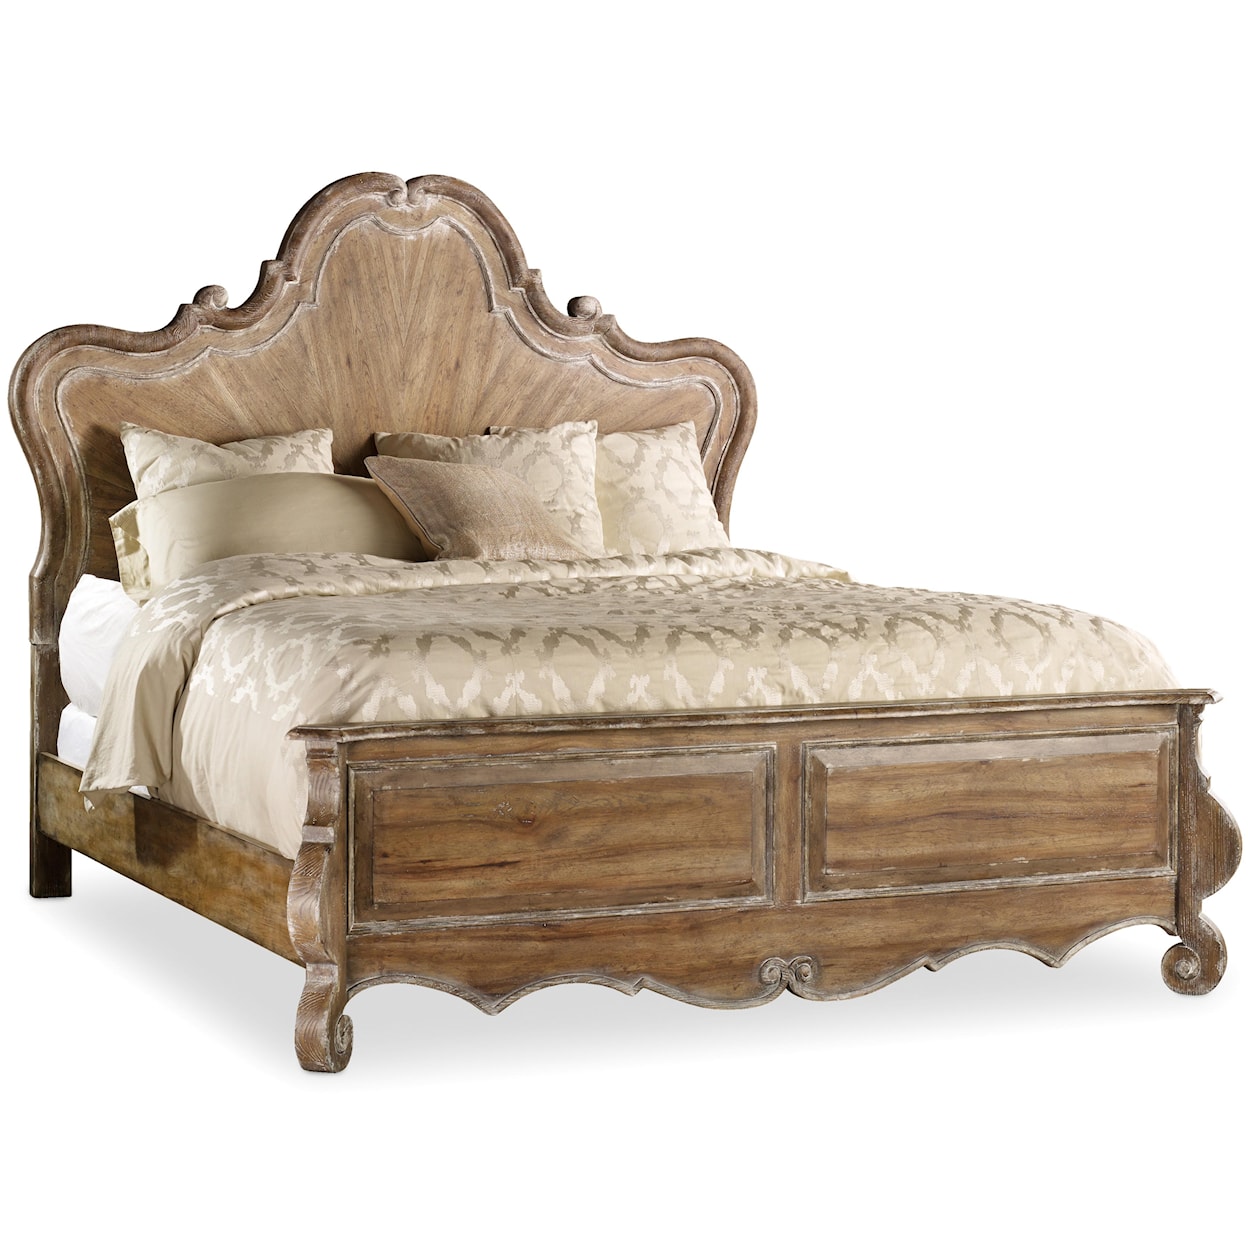 Hooker Furniture Chatelet Cal King Wood Panel Bed